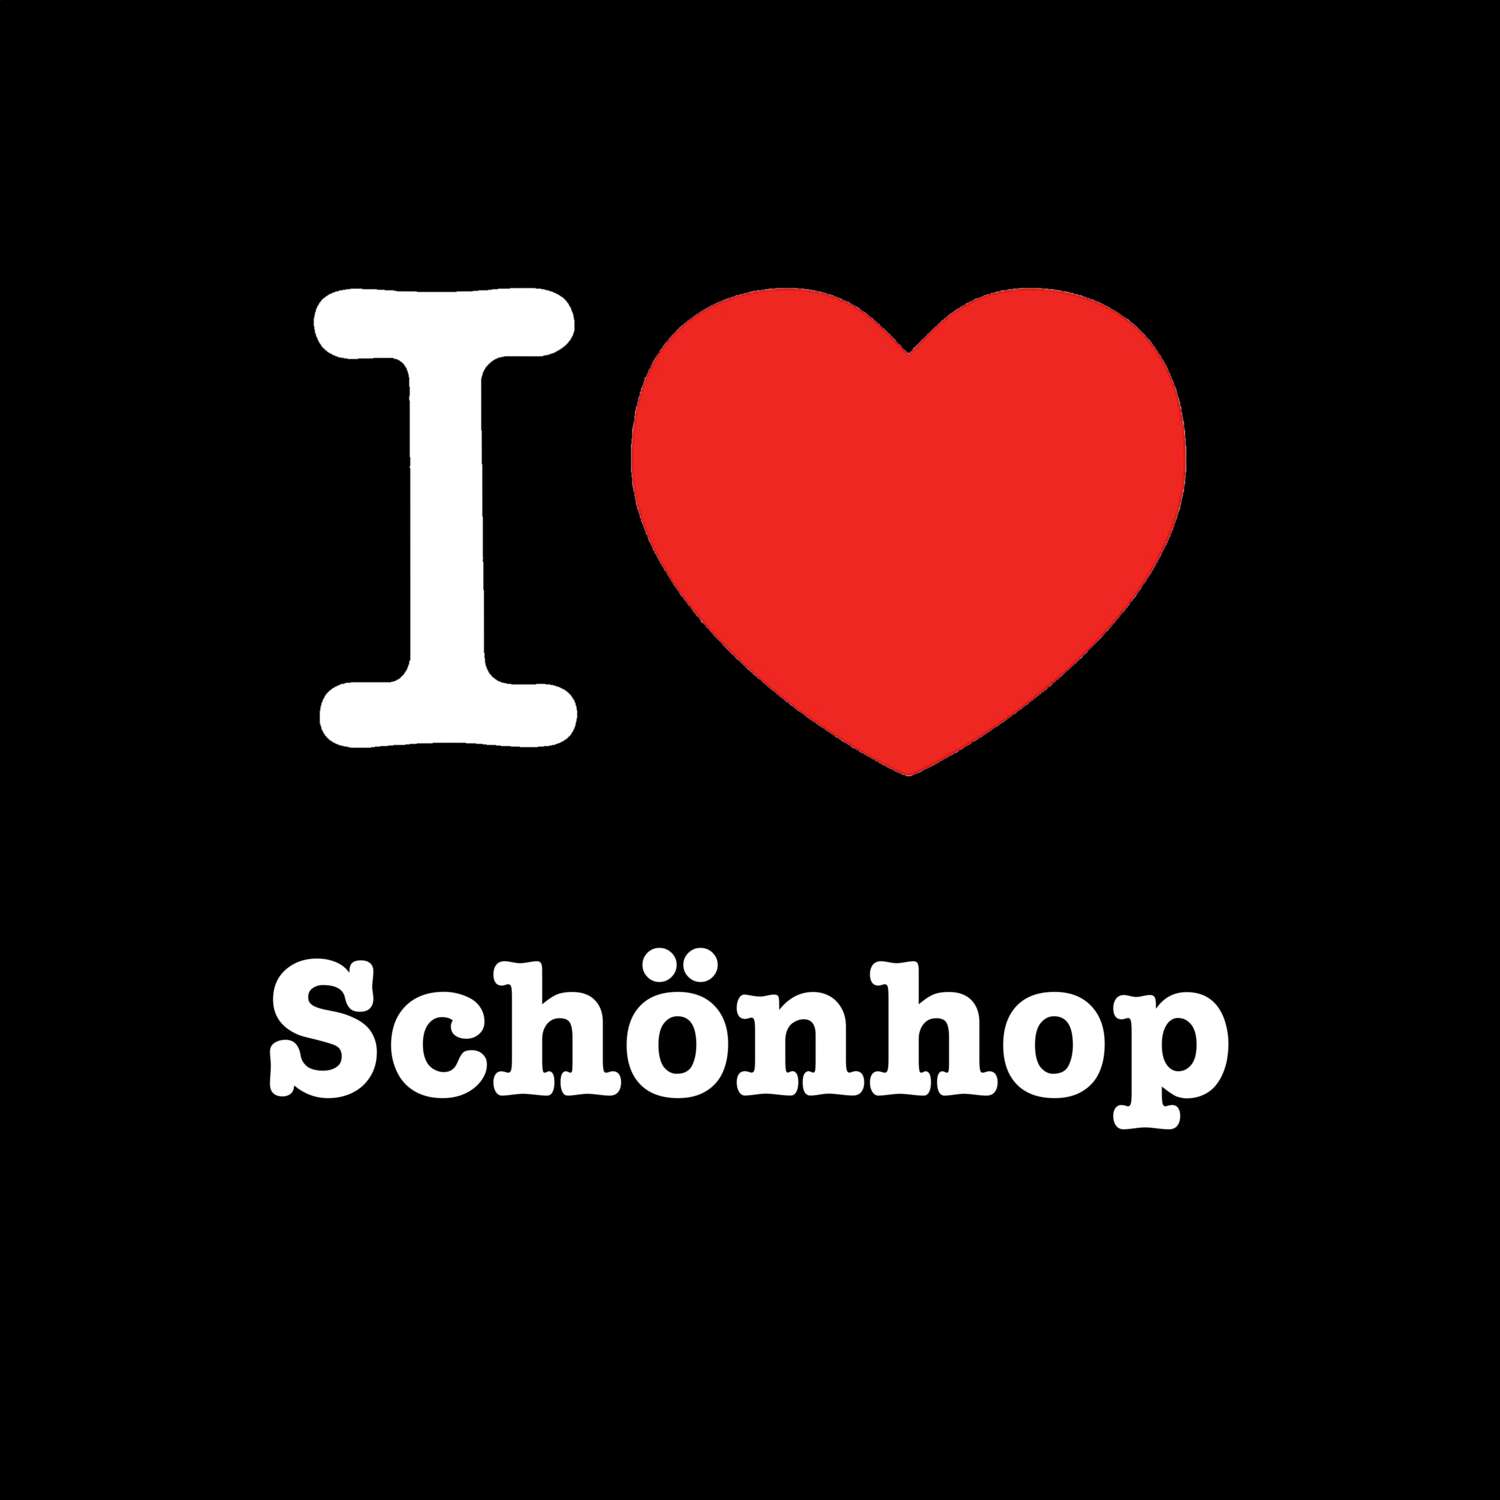 Schönhop T-Shirt »I love«